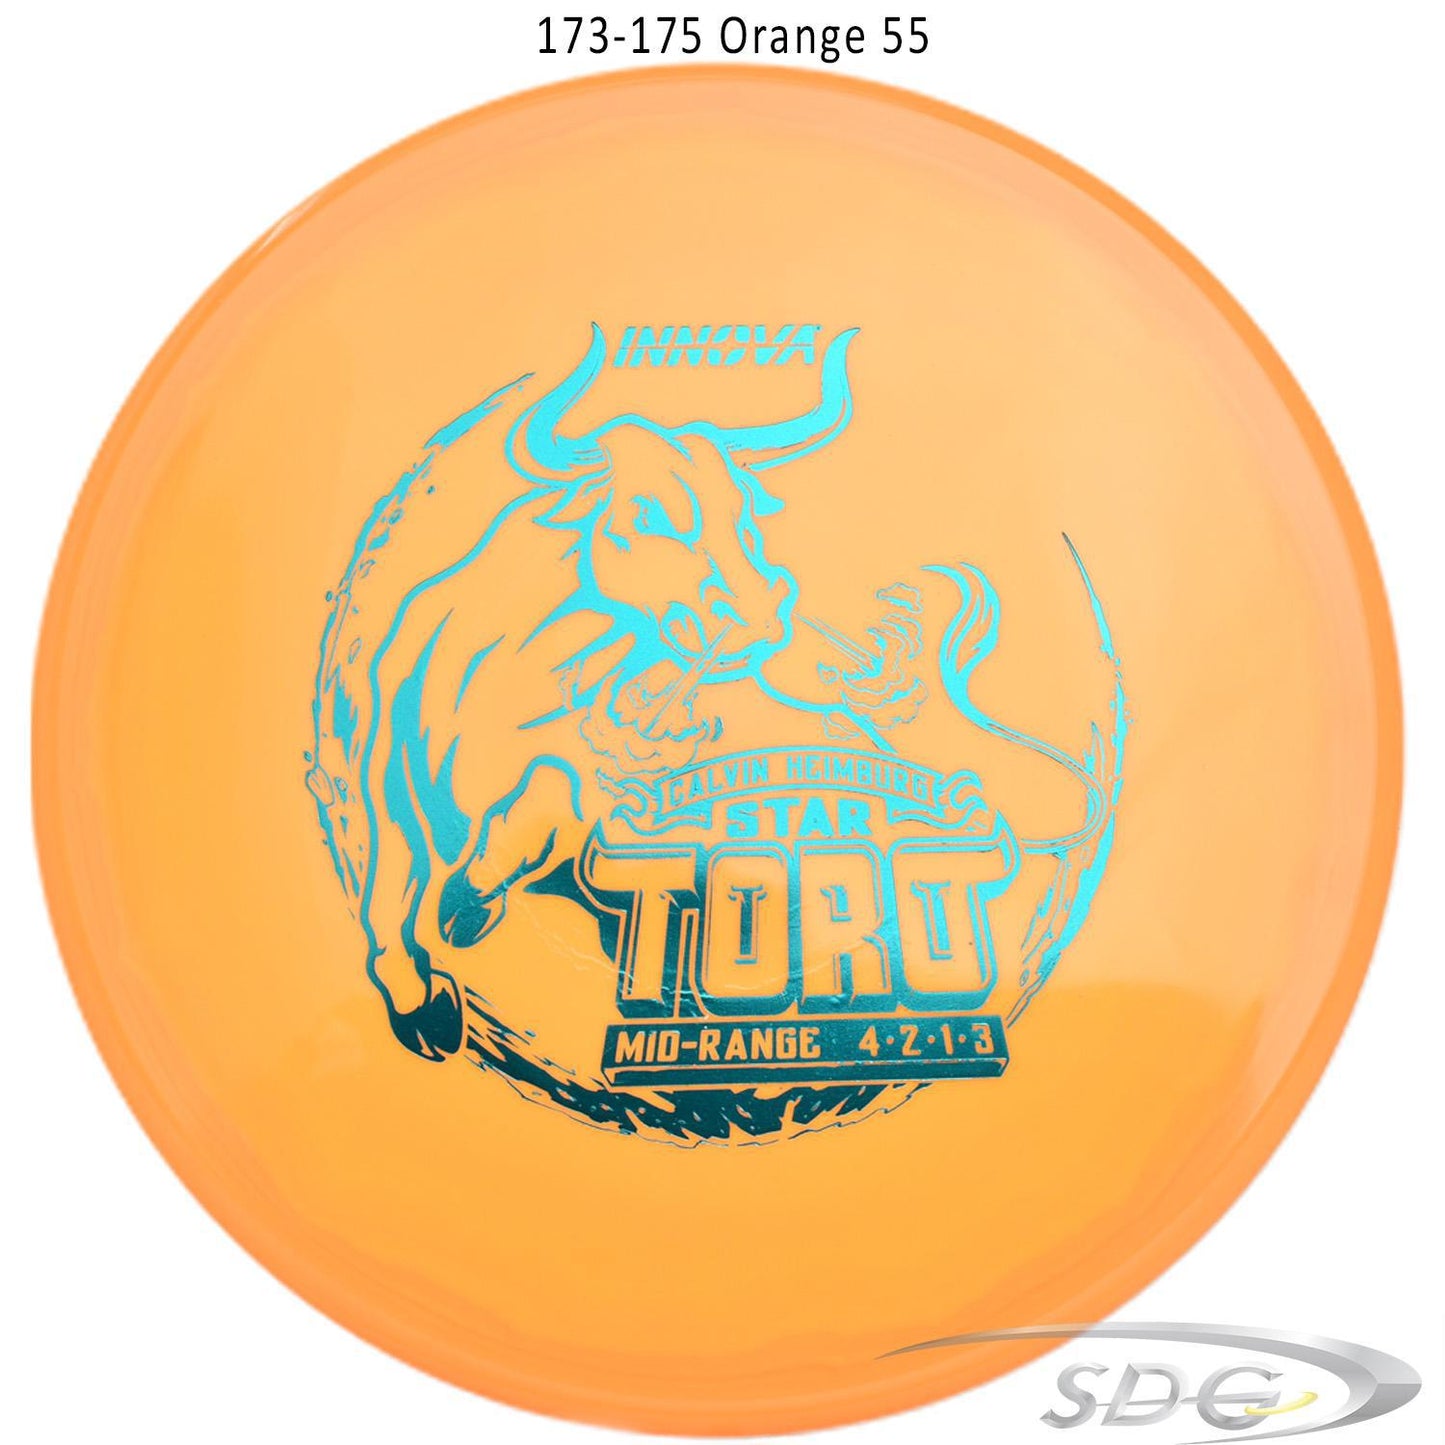 innova-star-toro-calvin-heimburg-signature-disc-golf-mid-range 173-175 Orange 55 